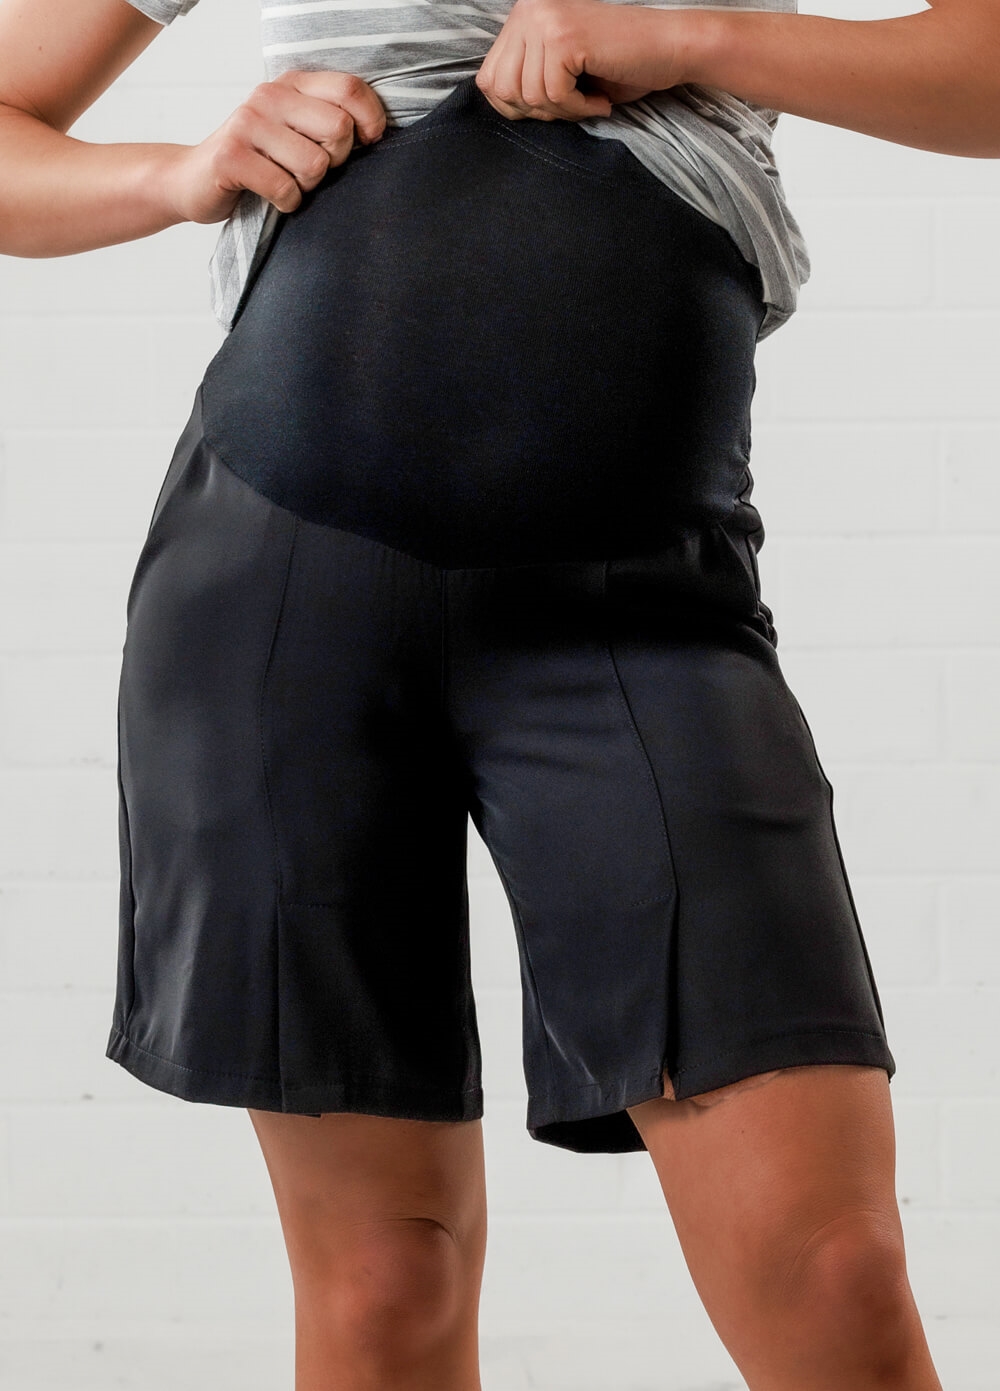 Lait & Co - Lunette Maternity Shorts in Black